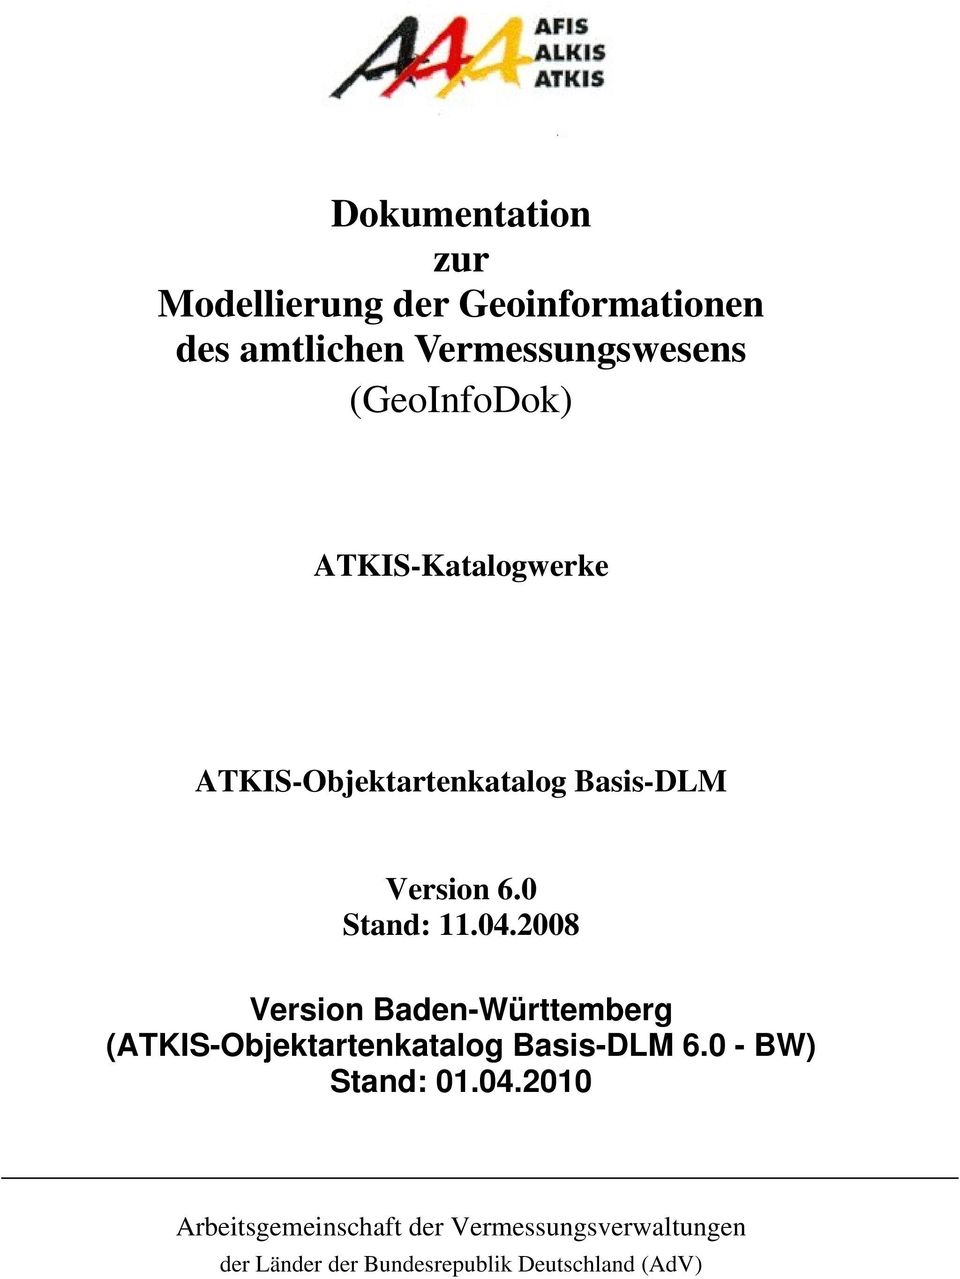 2008 Version Baden-Württemberg (ATKIS-Objektartenkatalog 6.0 - BW) Stand: 01.04.